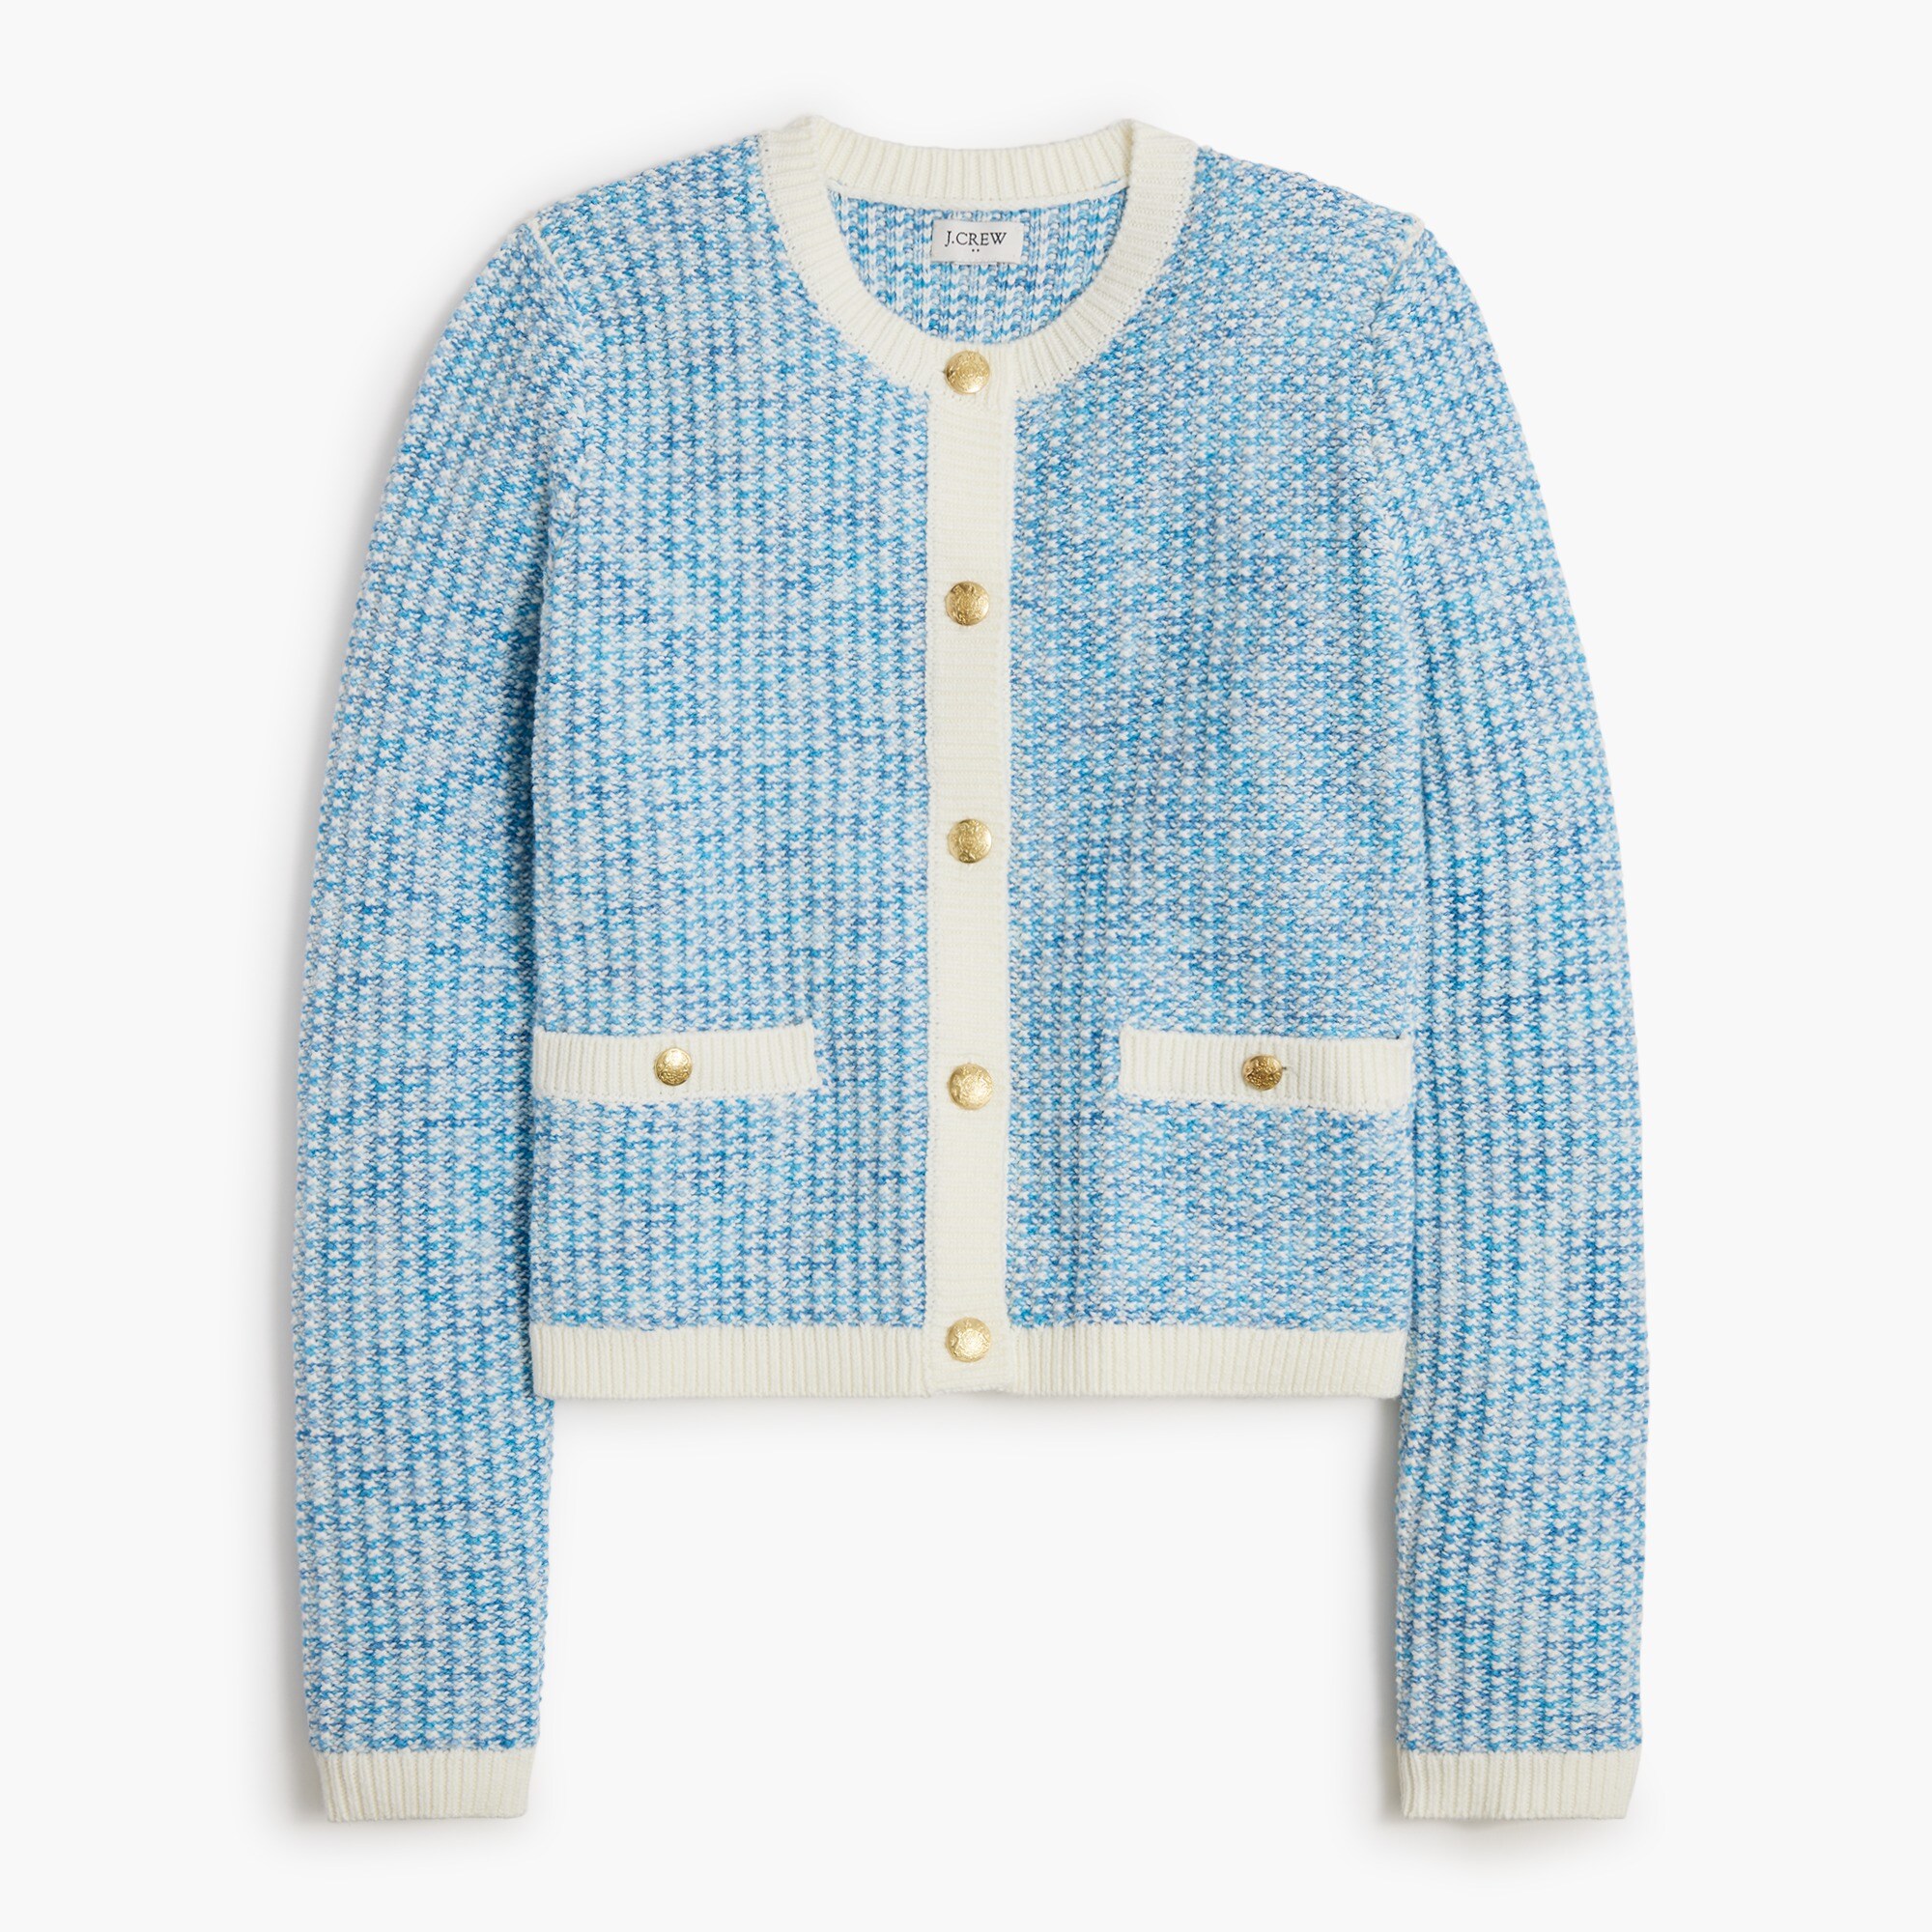  Popcorn-stitch lady jacket cardigan sweater